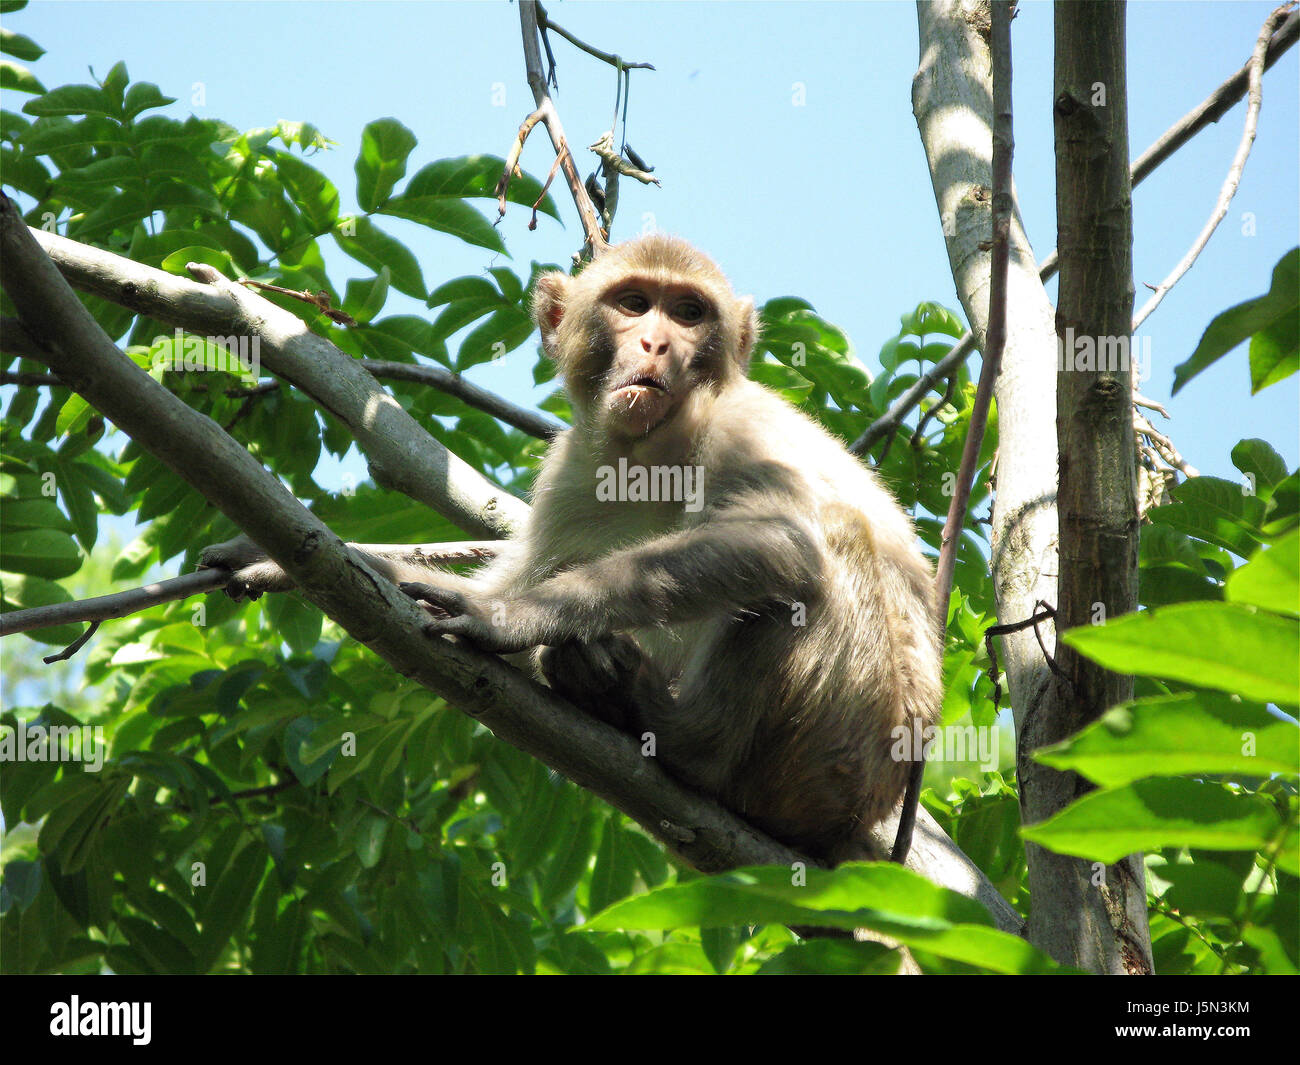 monkey in tree Stock Photo